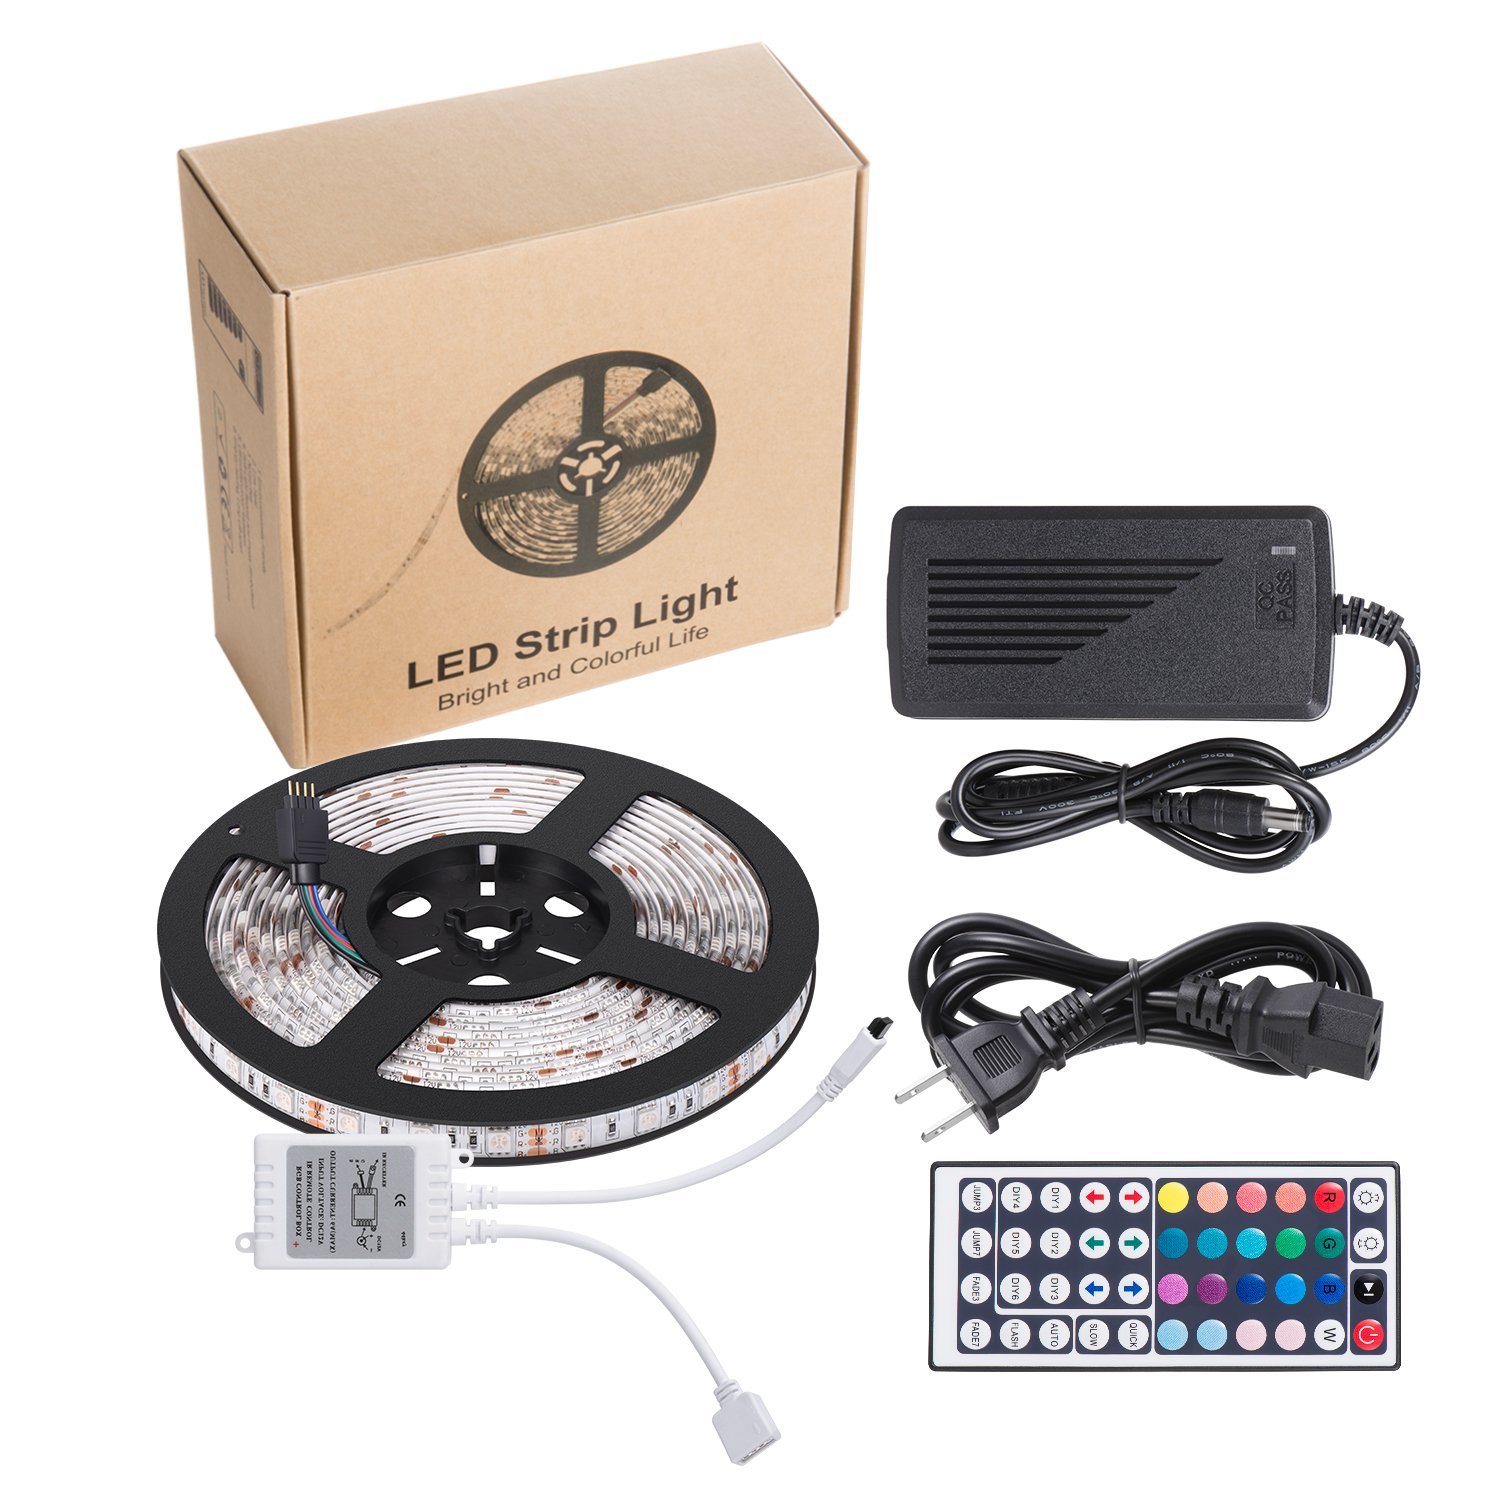 Buy 5050 LED RGB light strip online through Amazon (includes Prime)